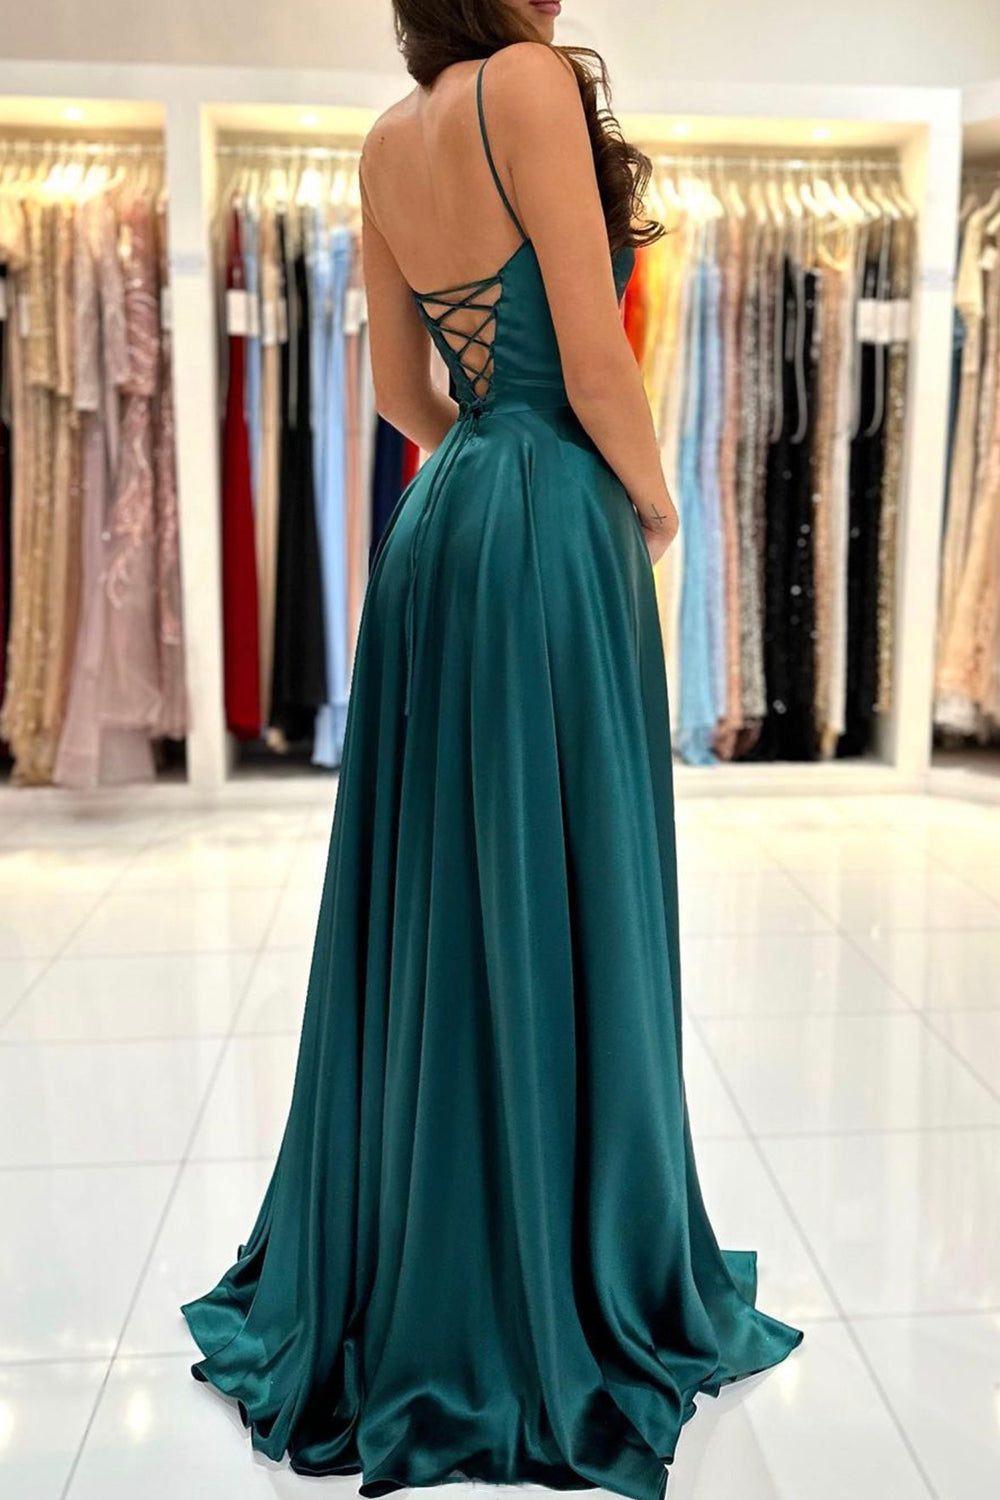 Green Satin Long Prom Dress, Simple A-Line Evening Dress